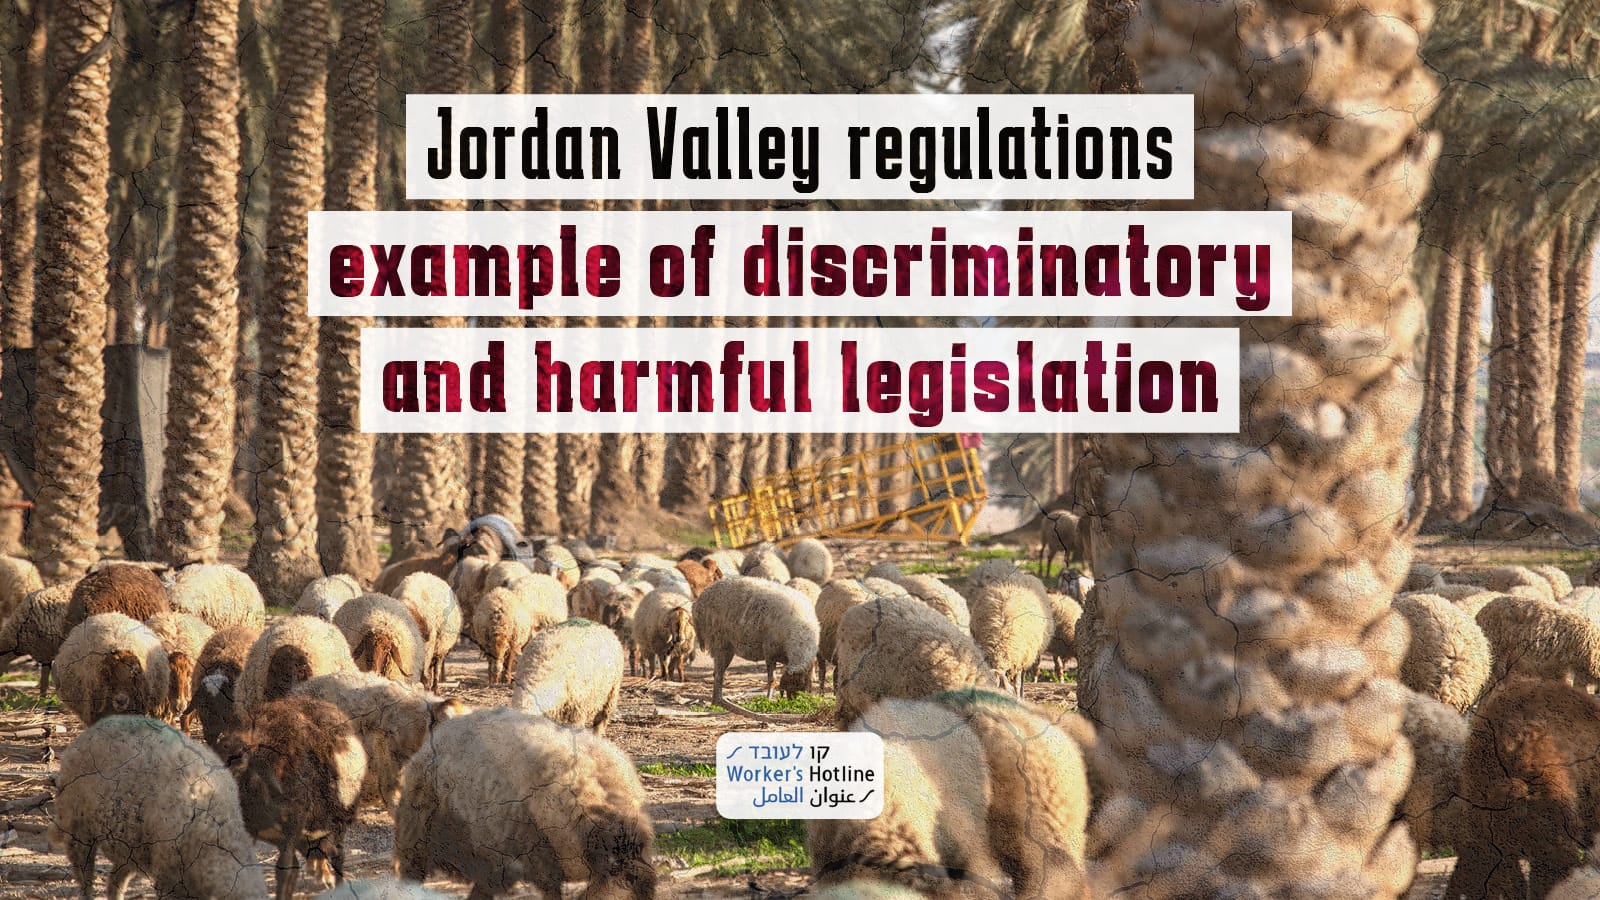 Jordan Valley regulations example of discriminatory and harmful legislation.